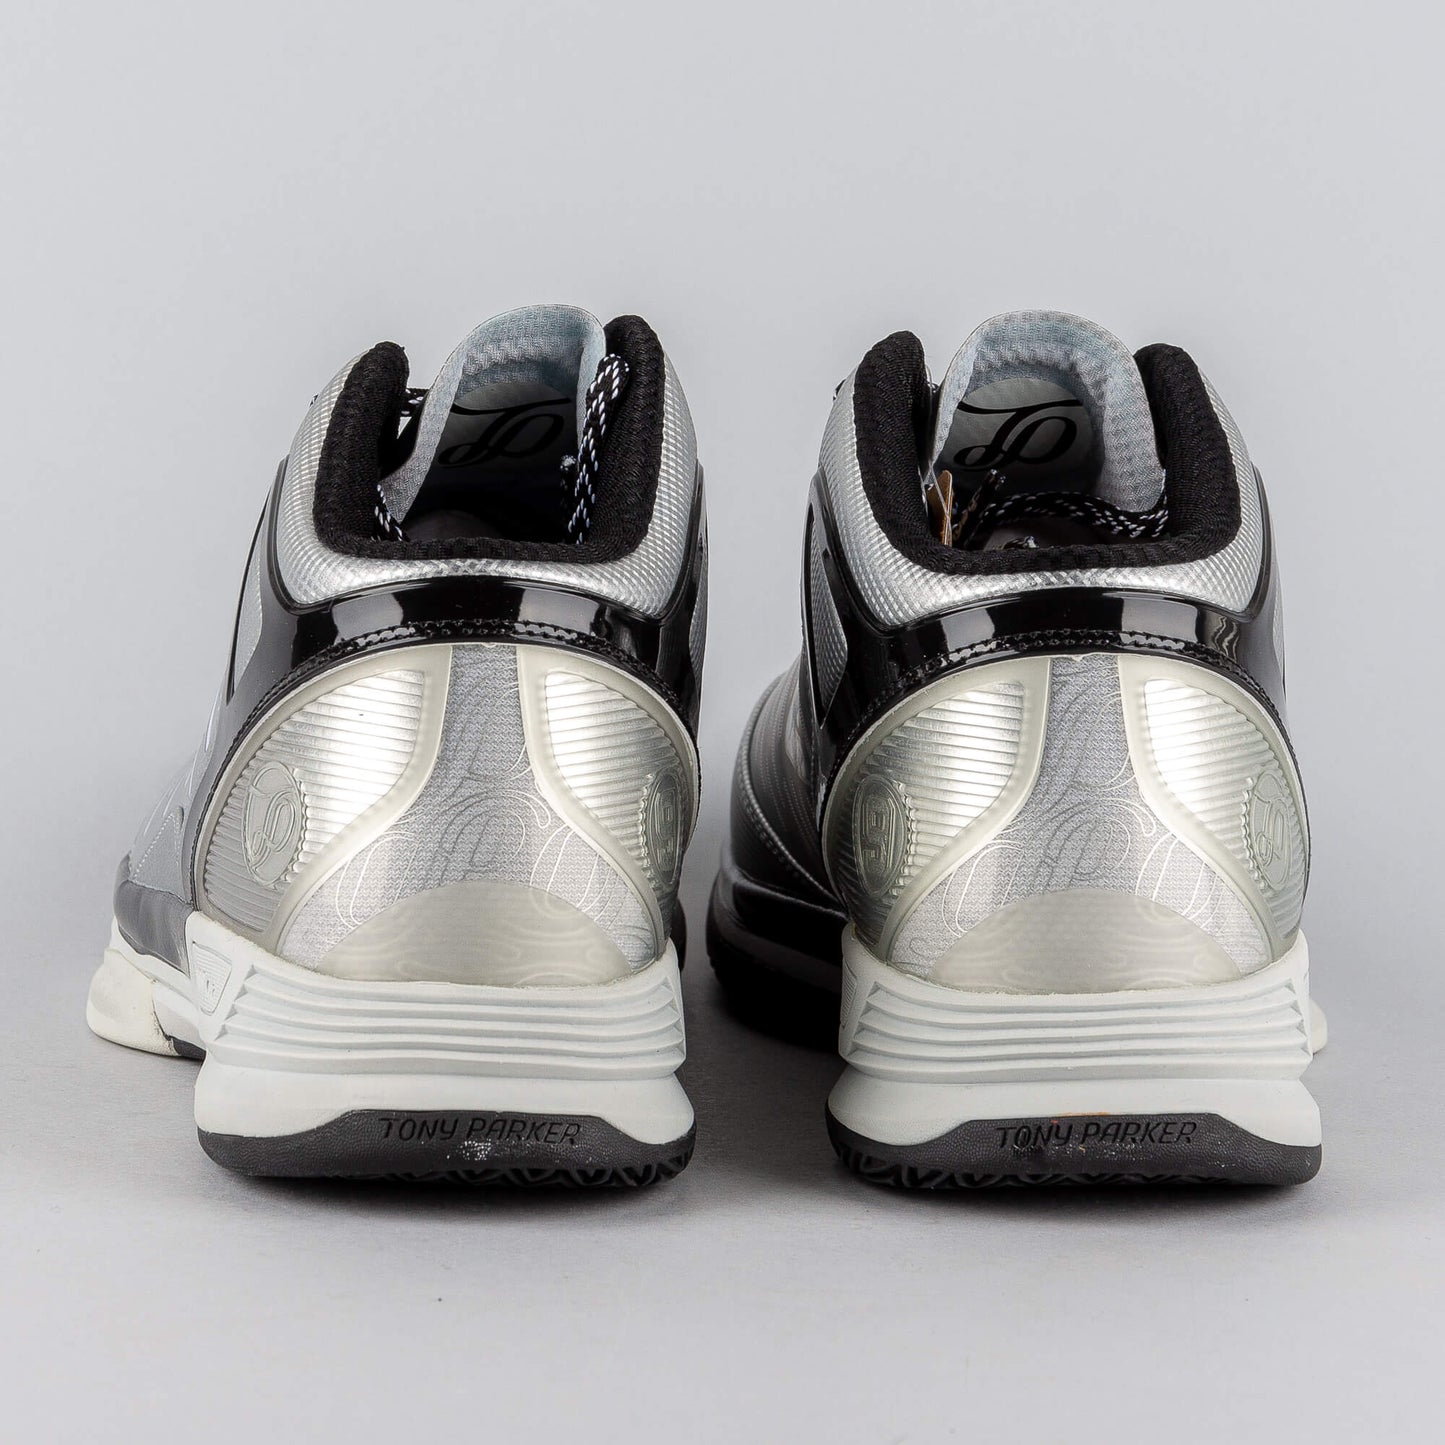 PEAK TP9-II Basketball Shoes Silver/Black